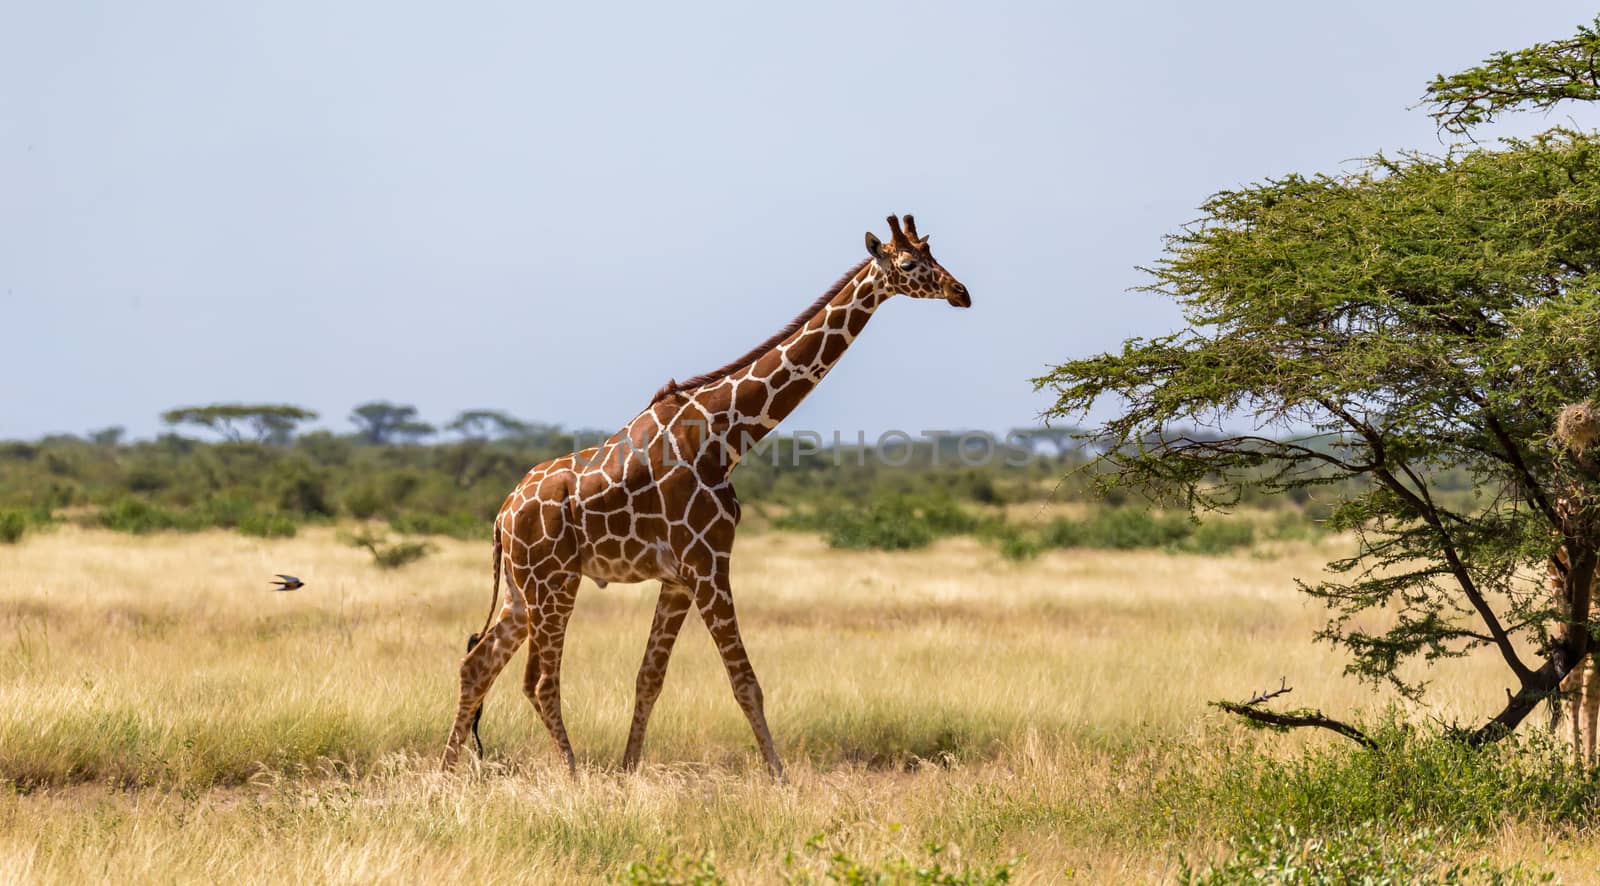 Giraffe walk through the savannah between the plants by 25ehaag6